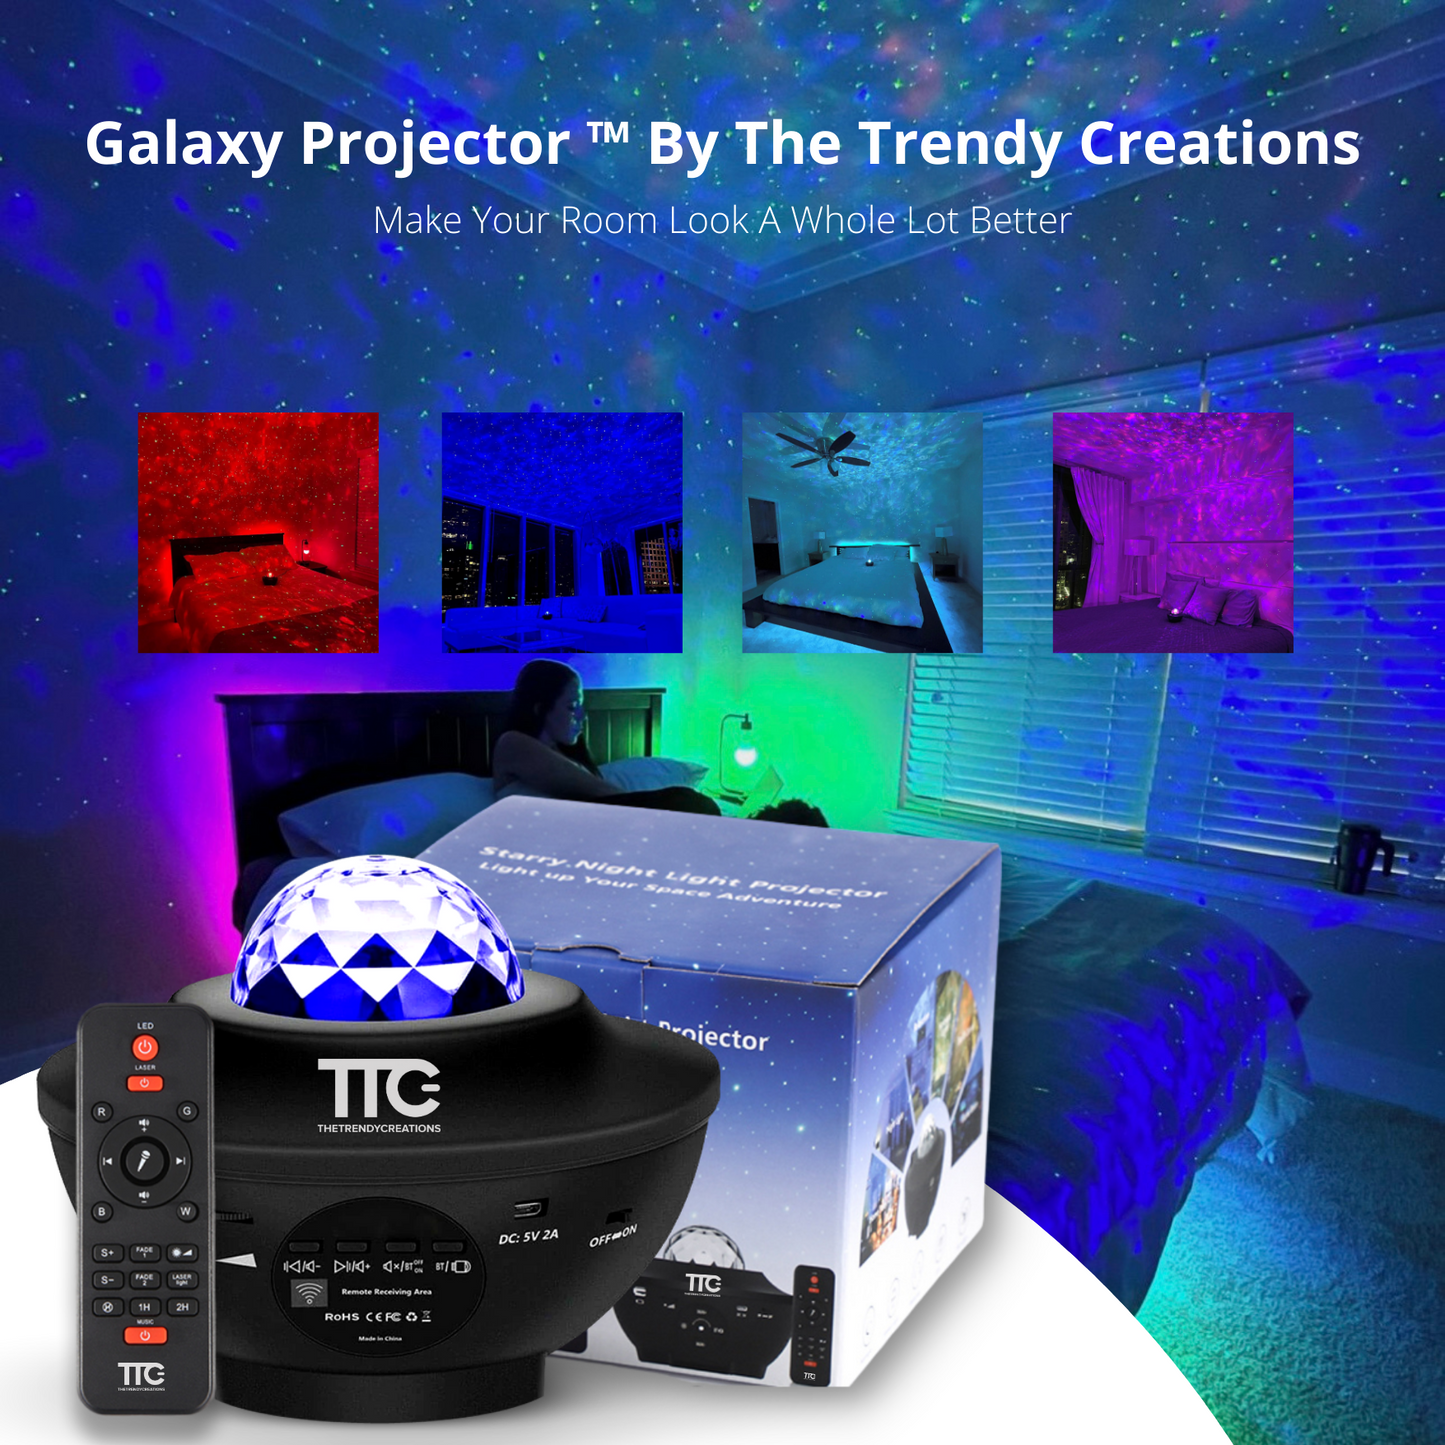 3 x TTC Galaxy Projector ™